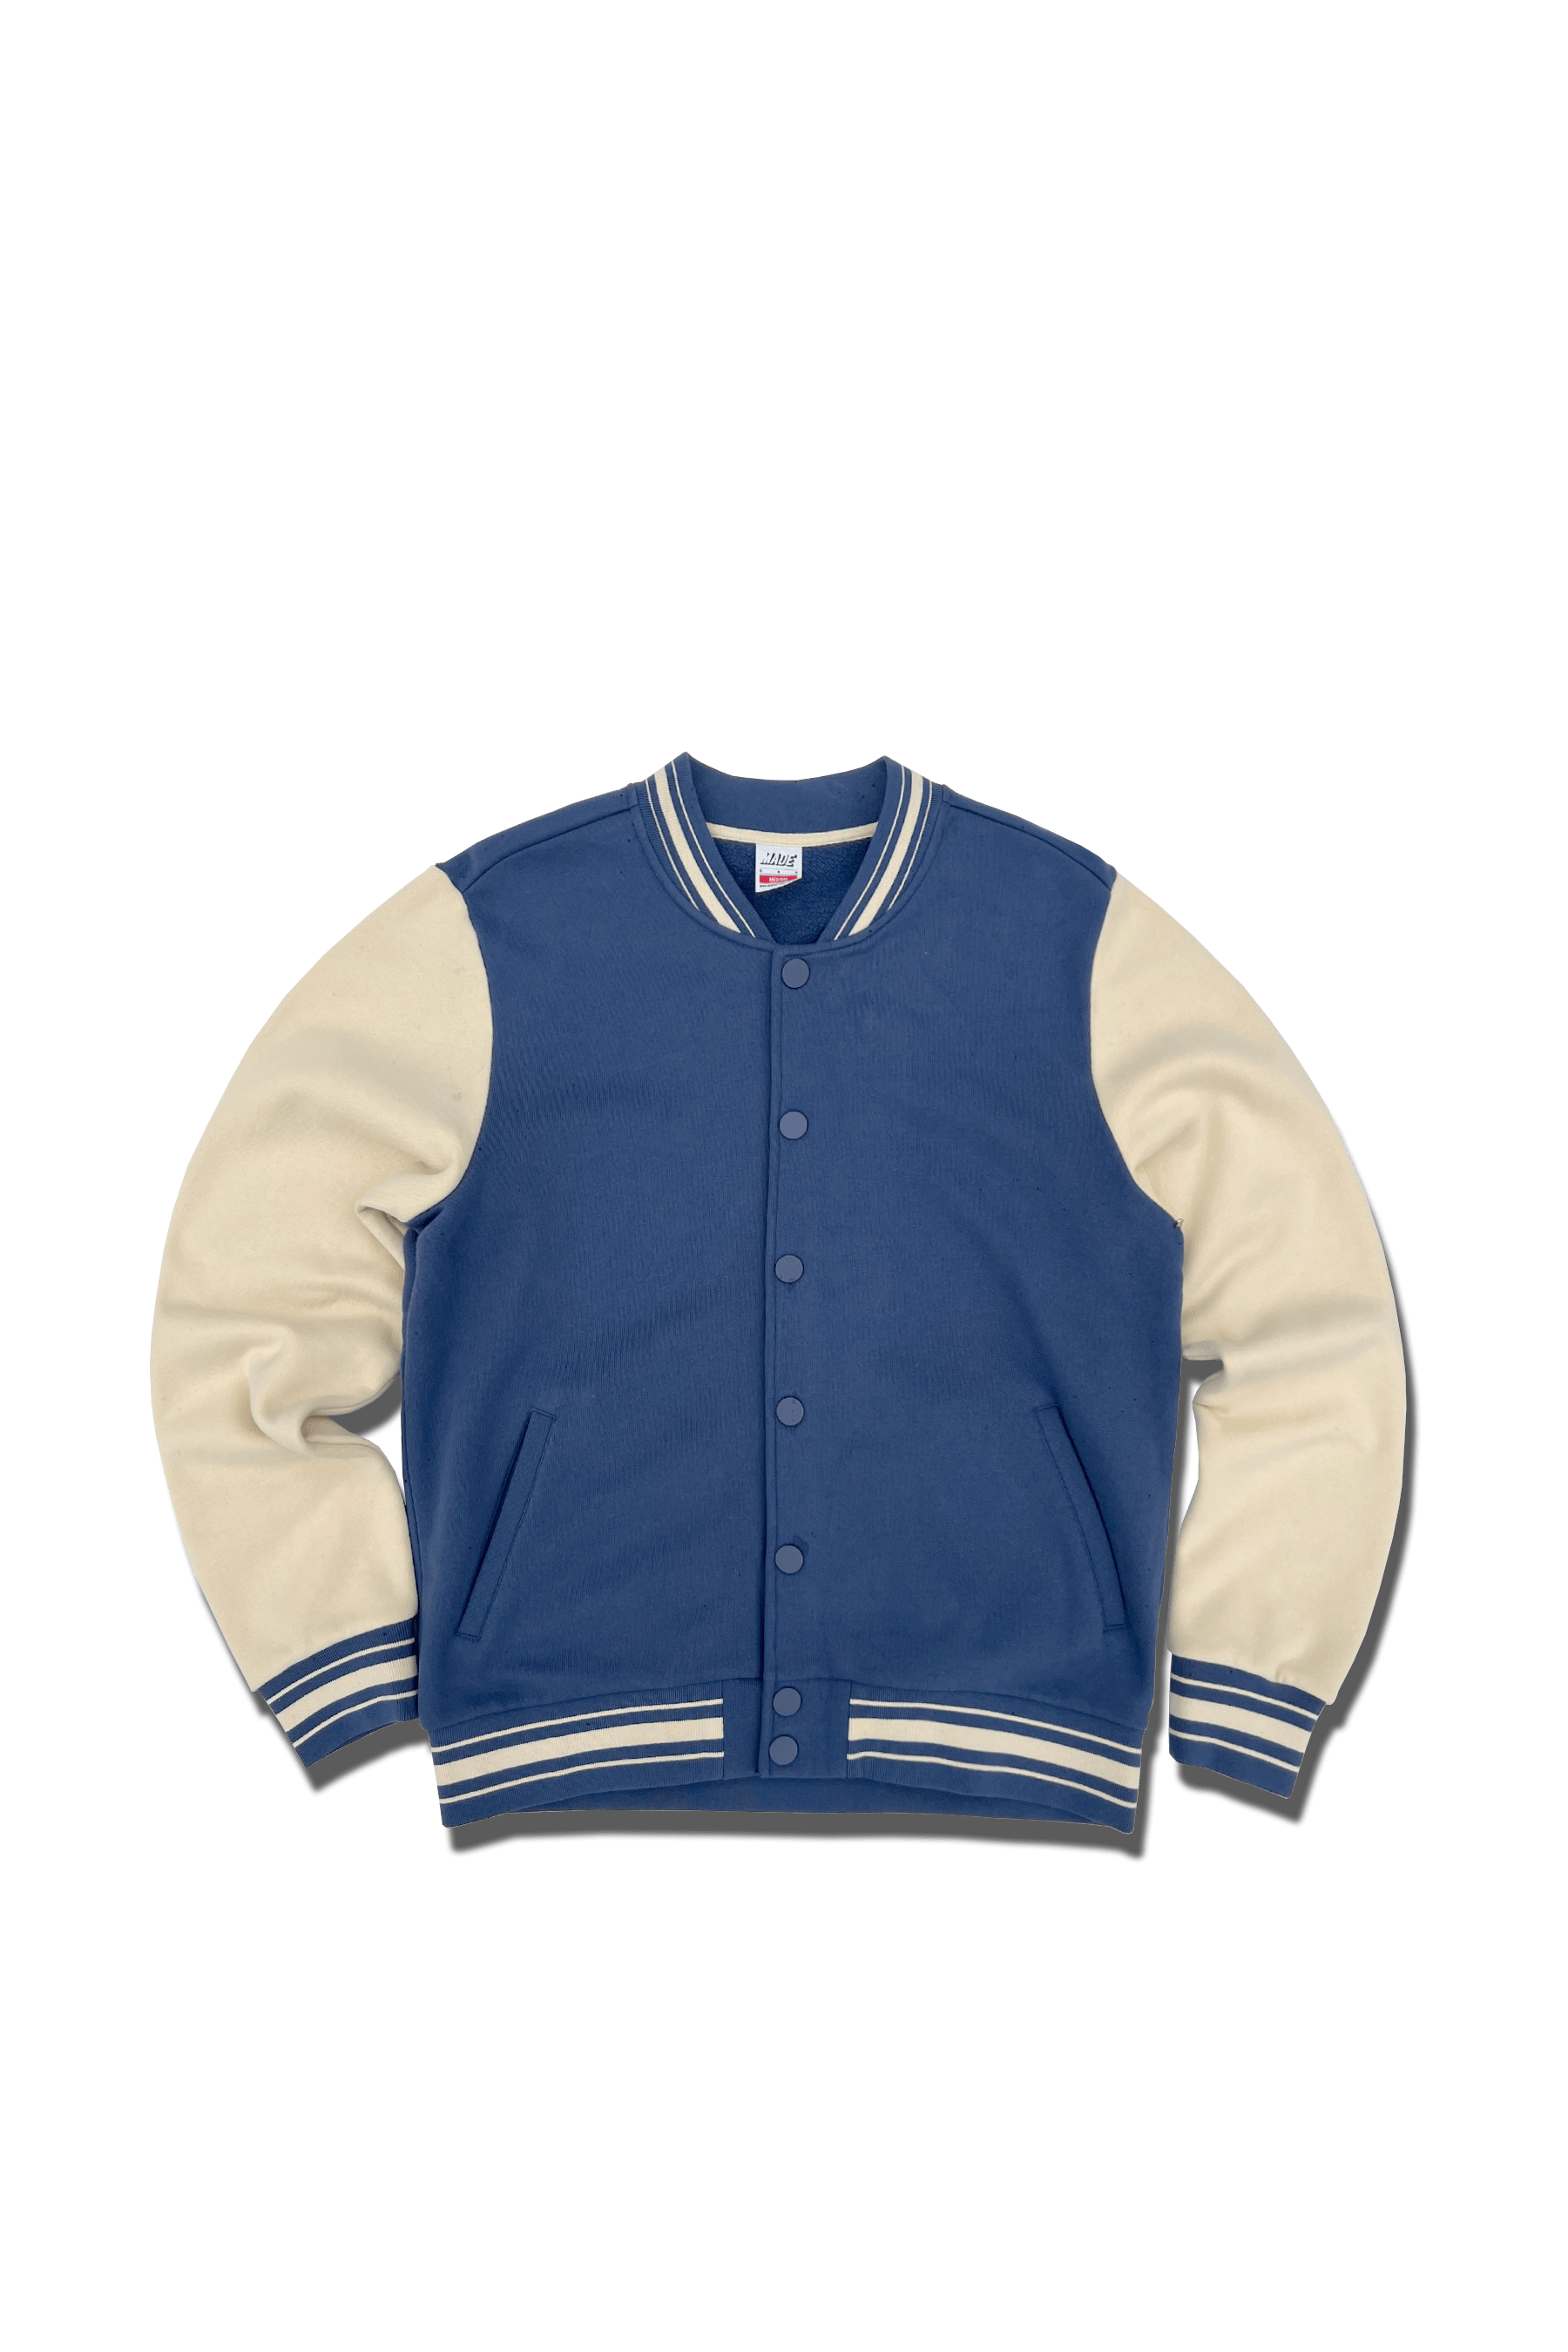 Jacket Makers Varsity Jacket with Cream Sleeves